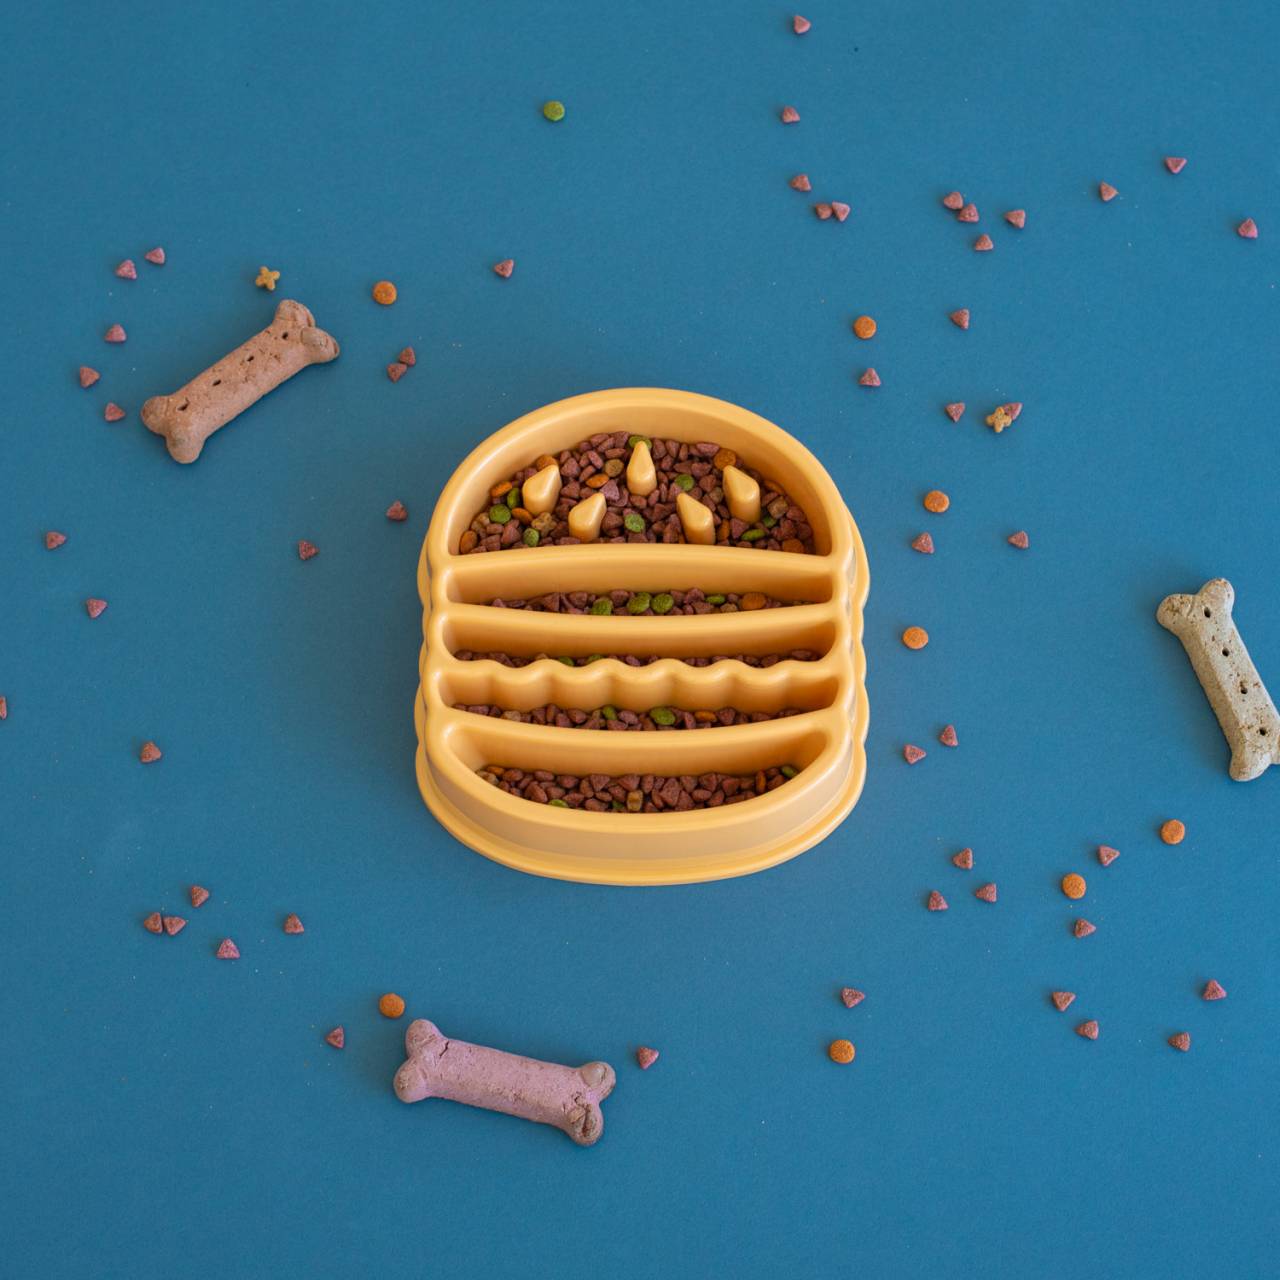 Zippy Paws Happy Bowl Interactive Slow Food Dog Bowl - Burger